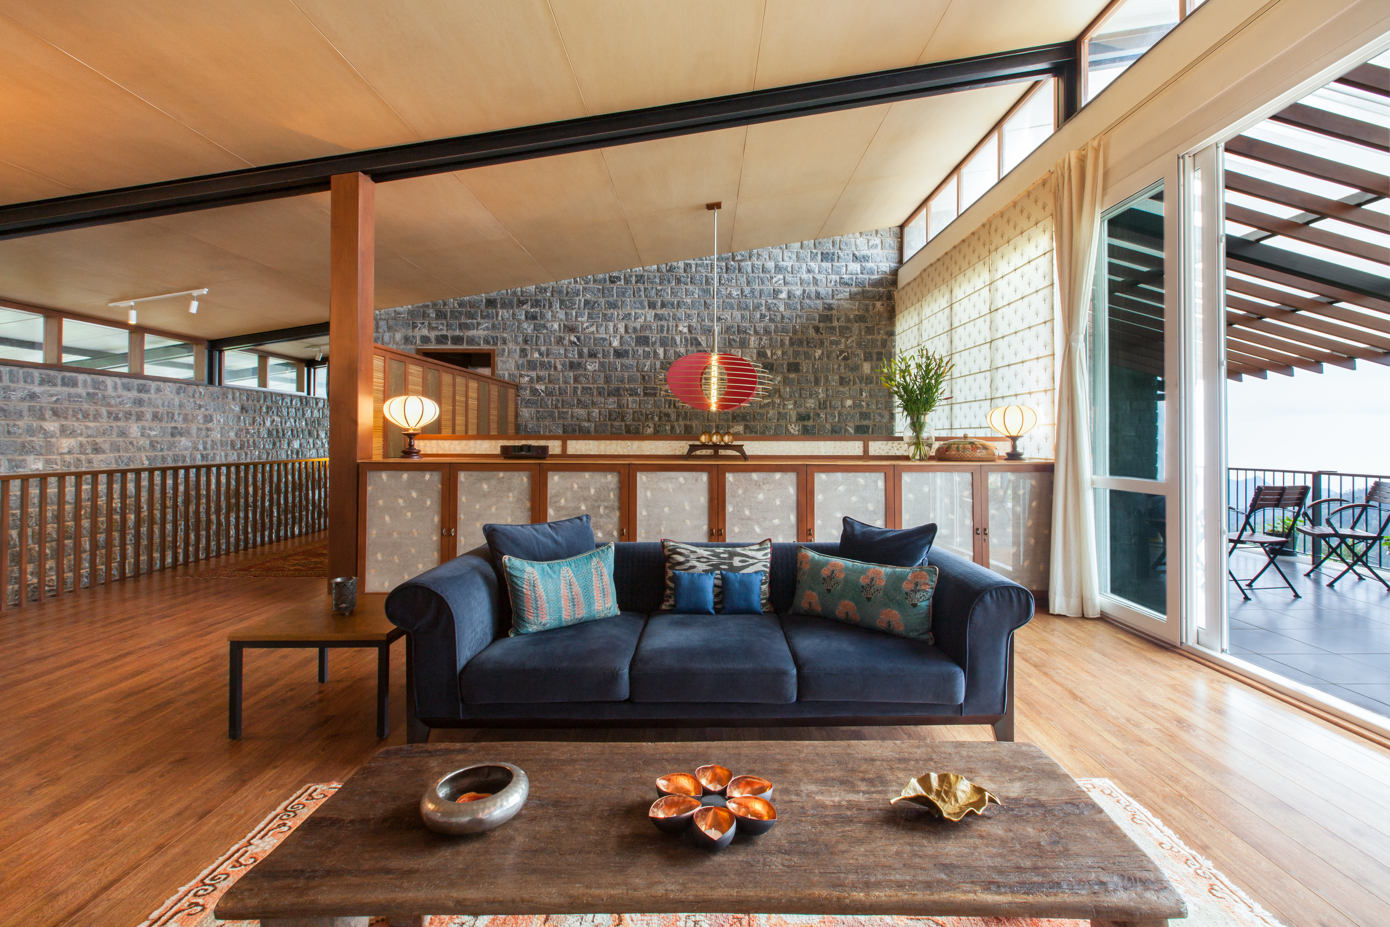 Stepped House: Studio Lotus’s Hill Retreat in Coonoor